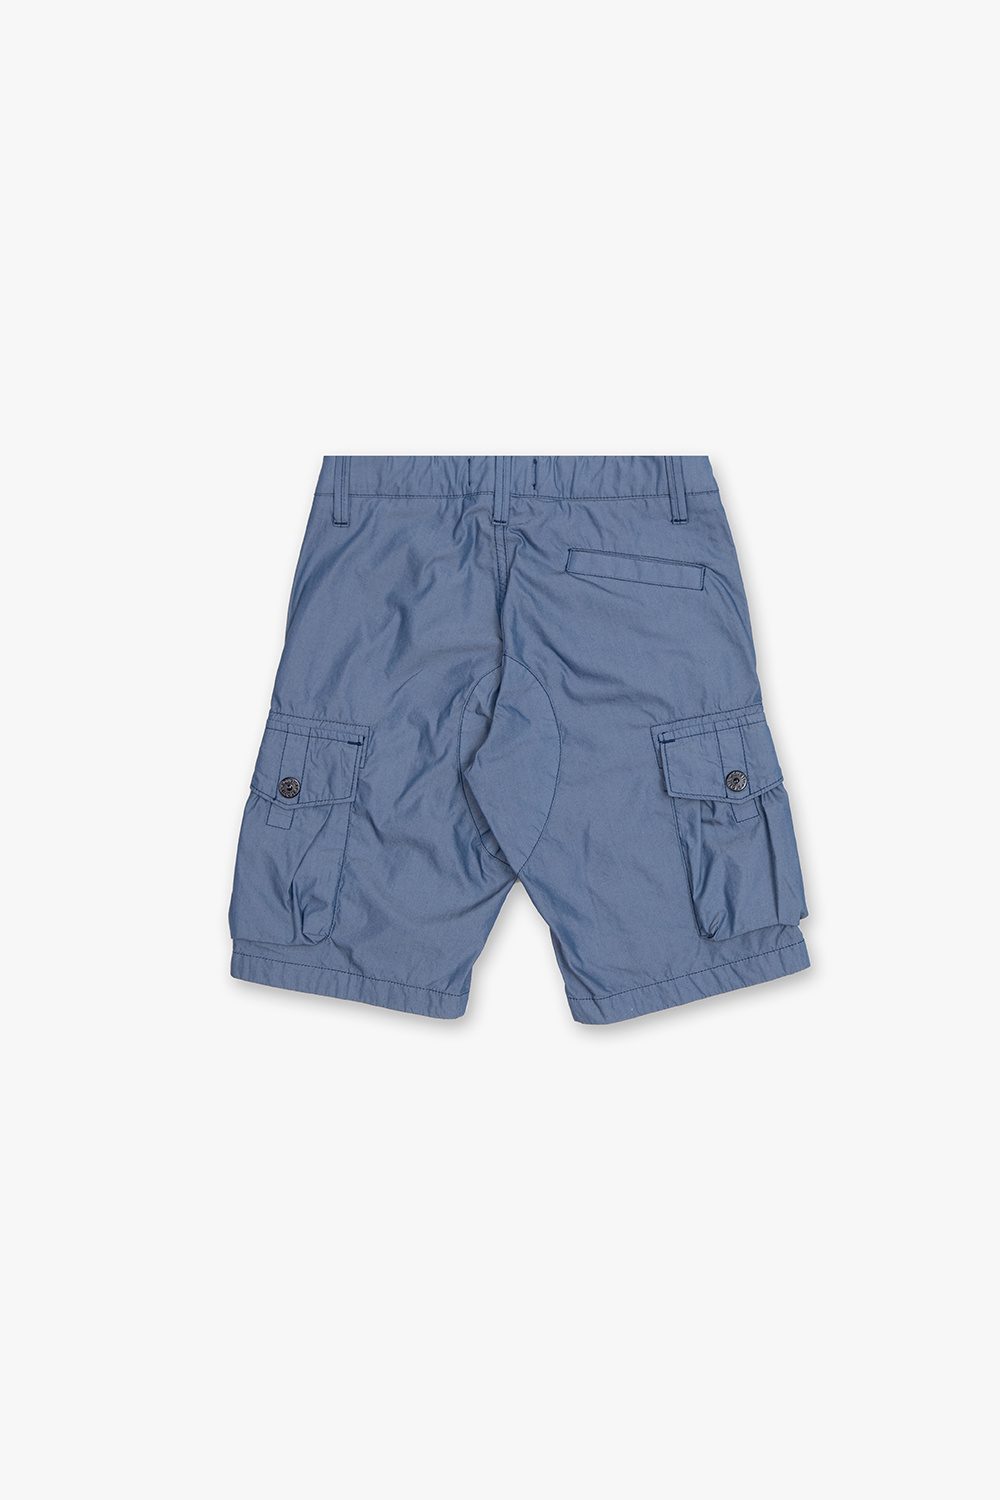 Stone Island Kids Cargo Slim shorts